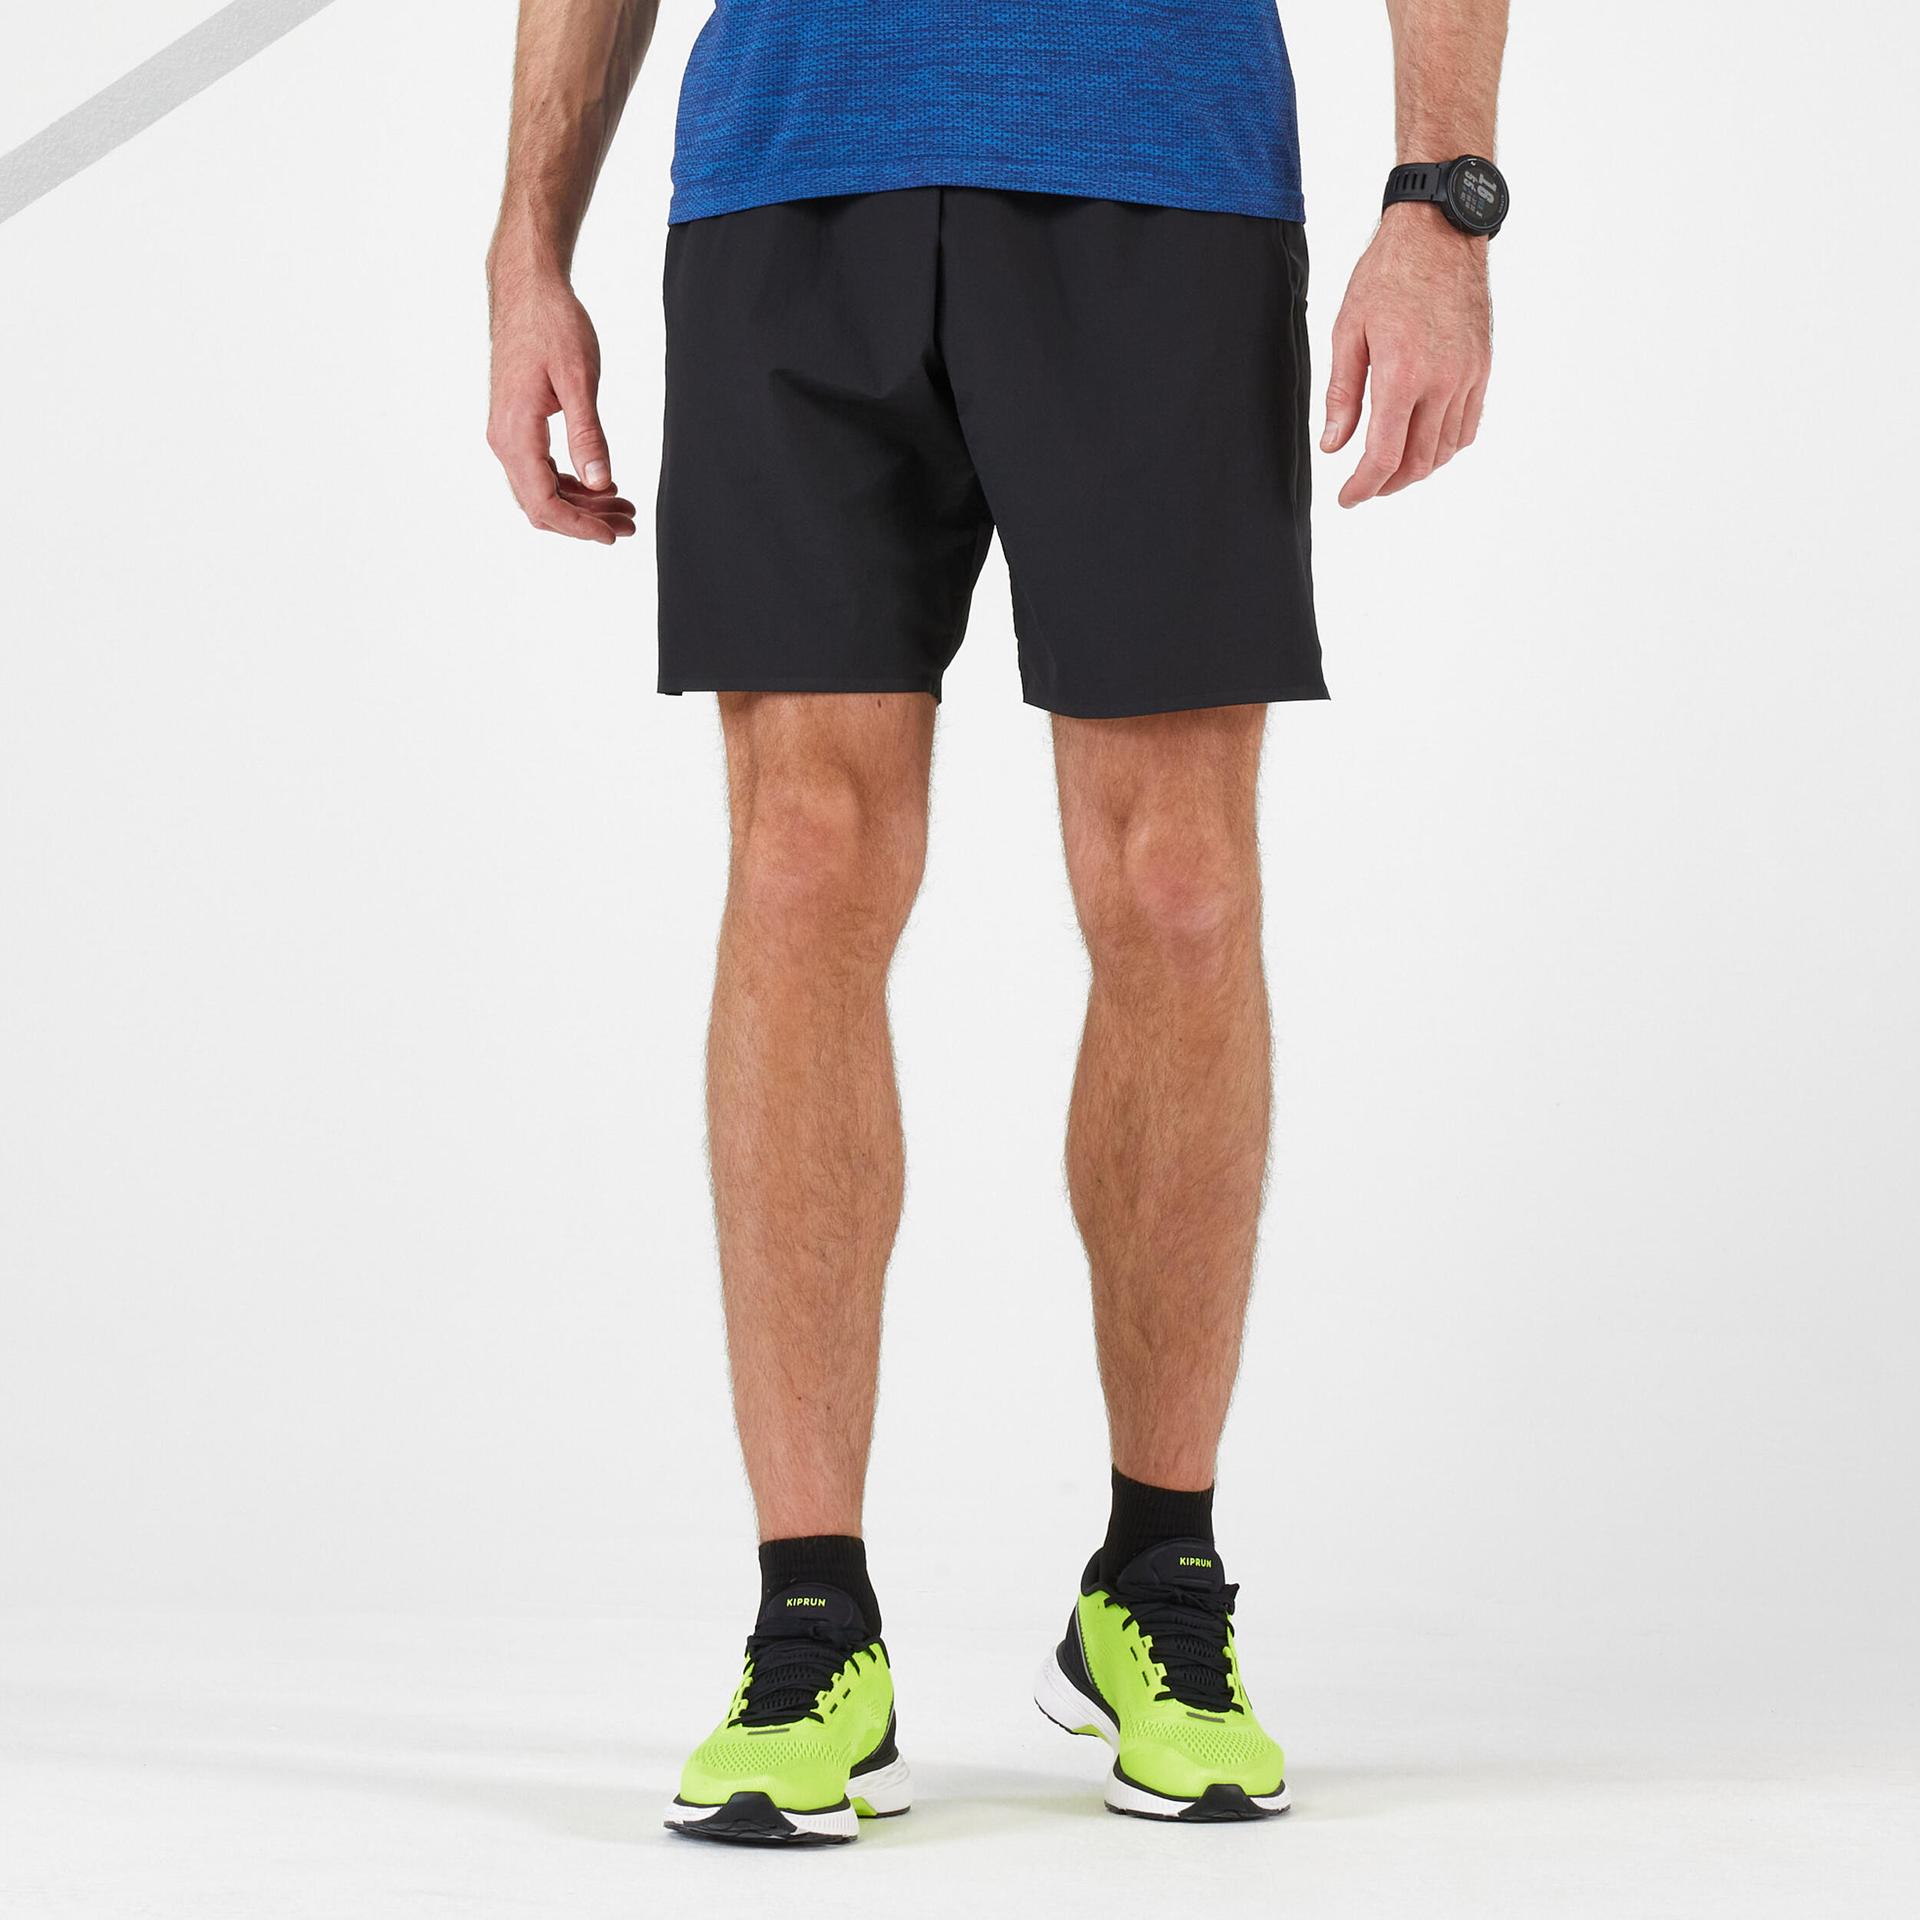 kiprun men's marathon running shorts with carry pockets - black